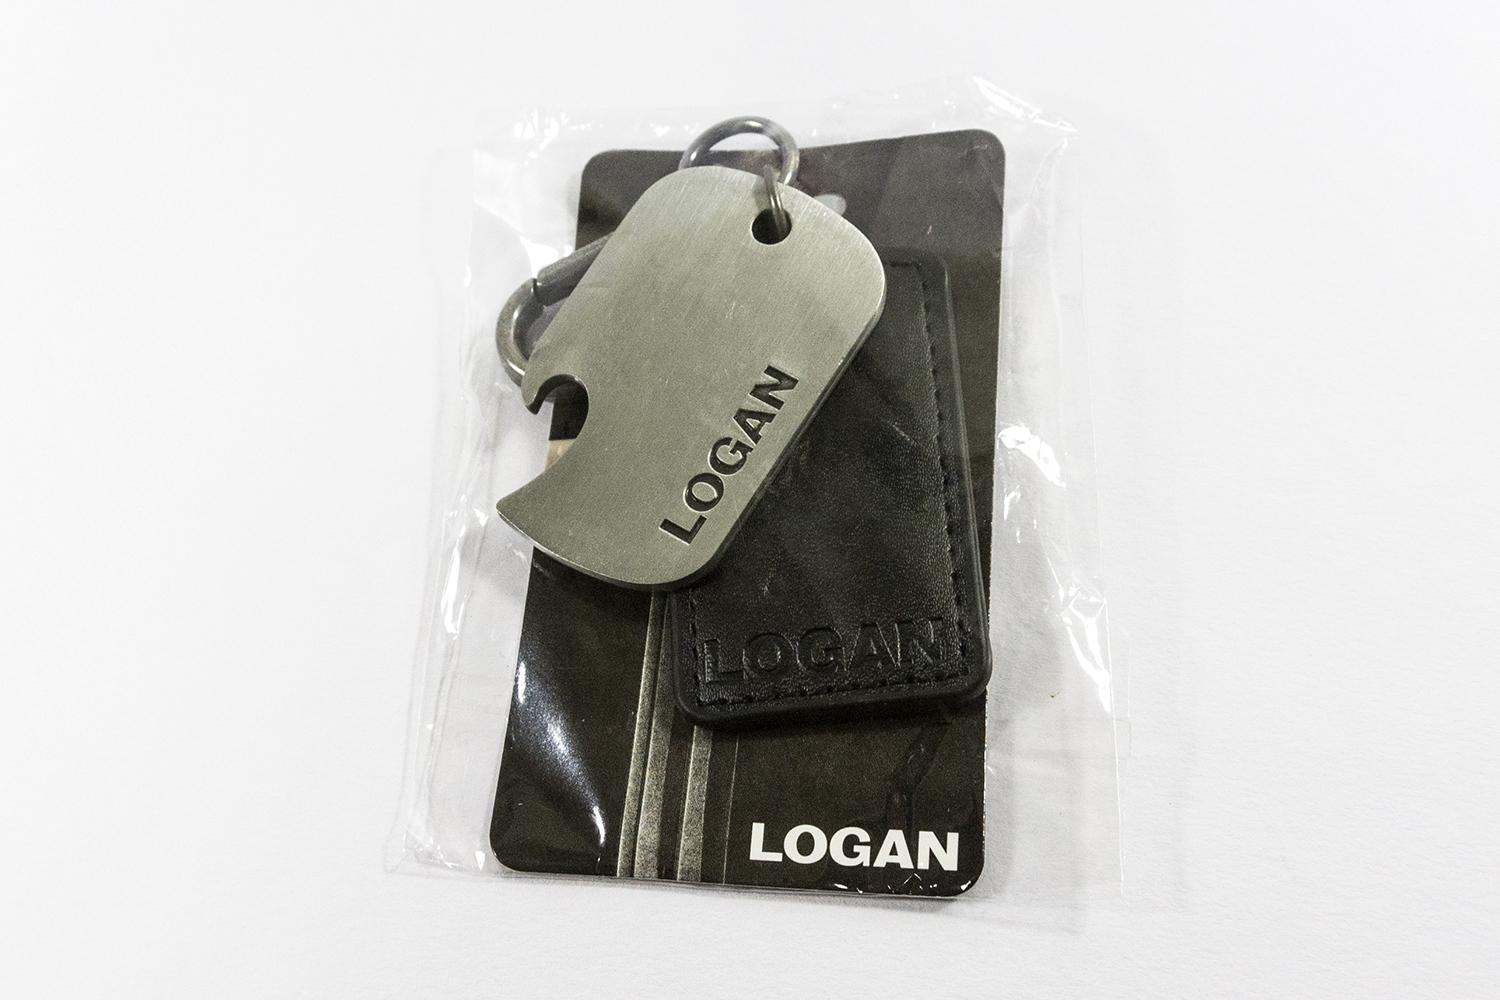 LOGAN steelbook ローガン スチールブック